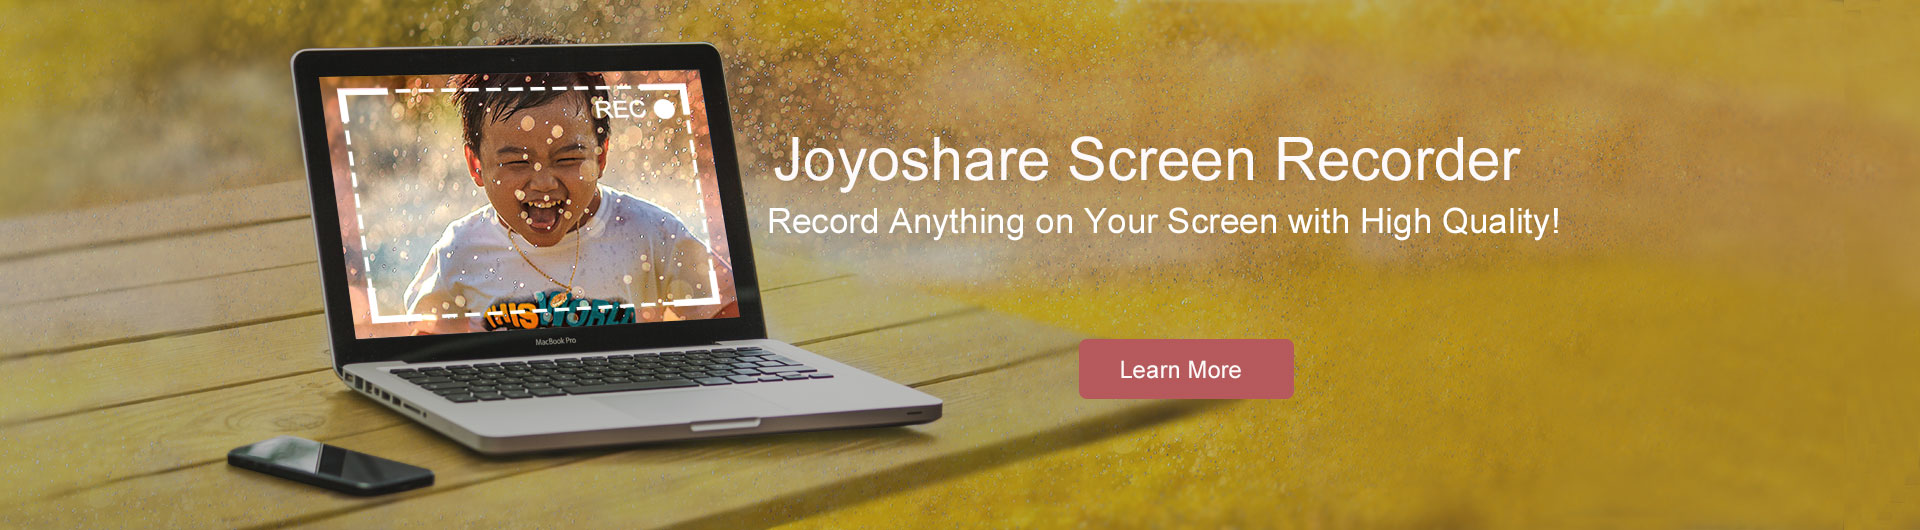 joyoshare screen recorder